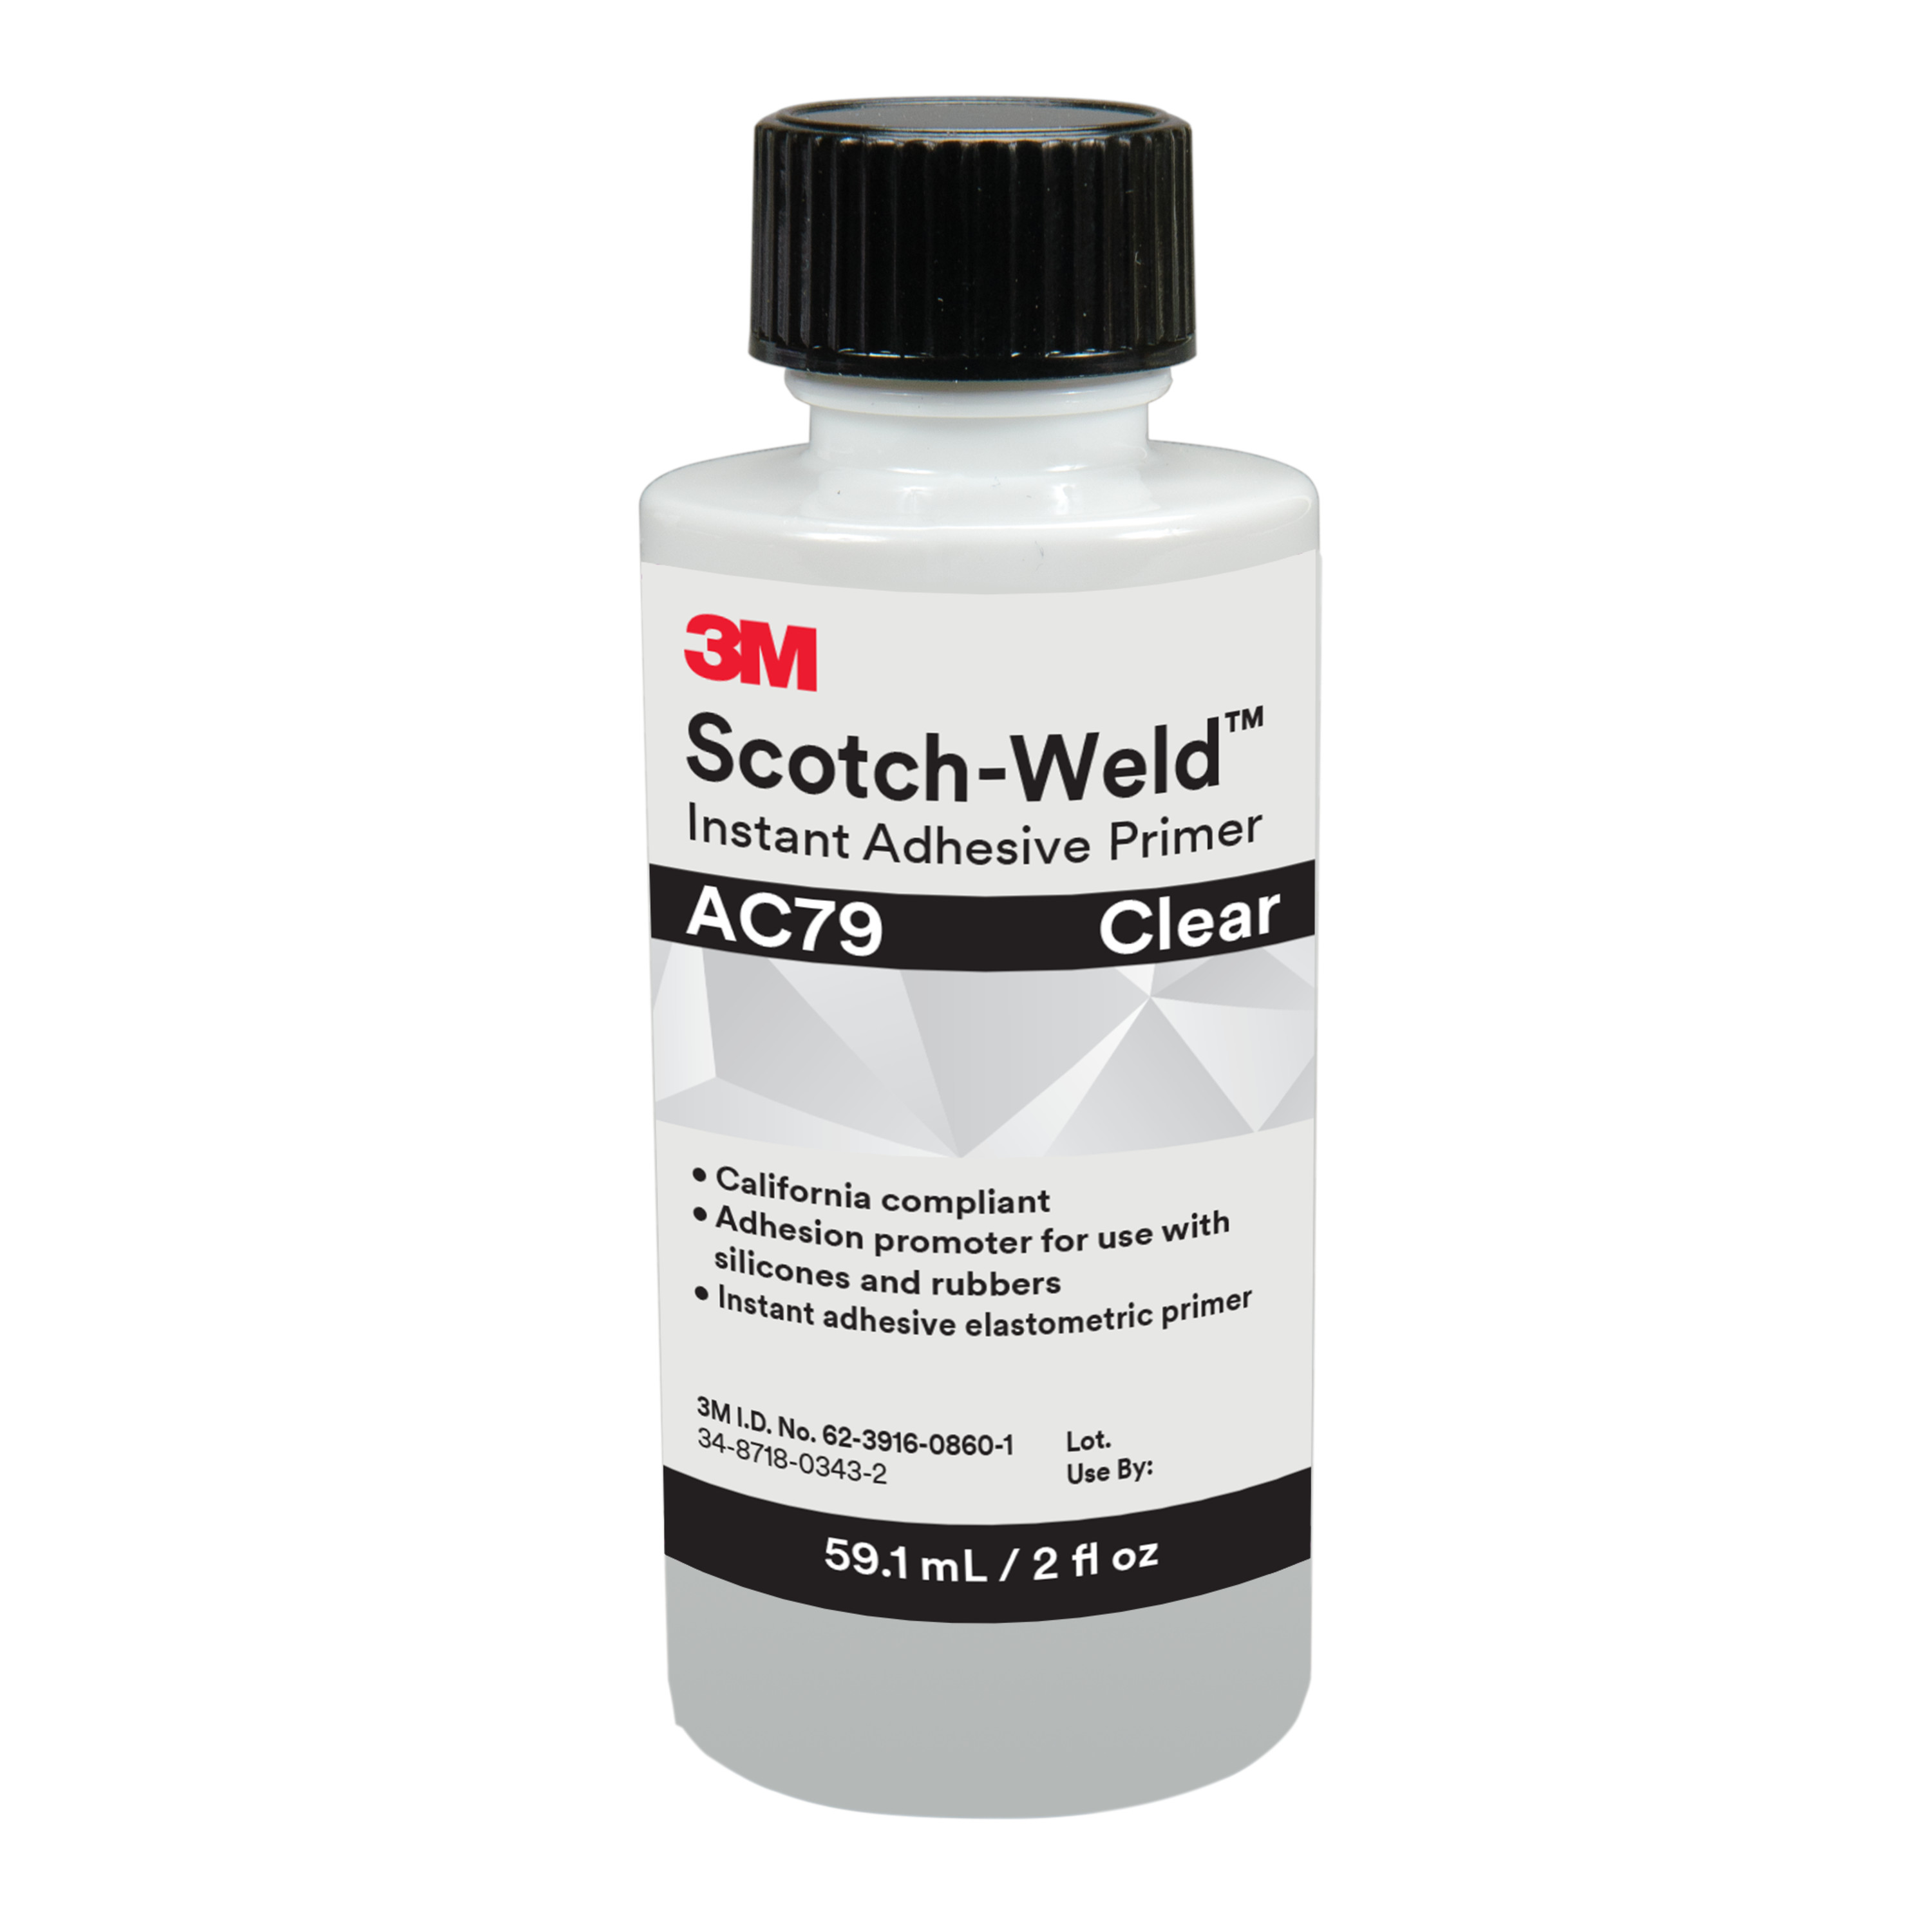 3M™ Scotch-Weld™ Instant Adhesive Primer AC79, Clear, 2 fl oz Bottle,
10/case